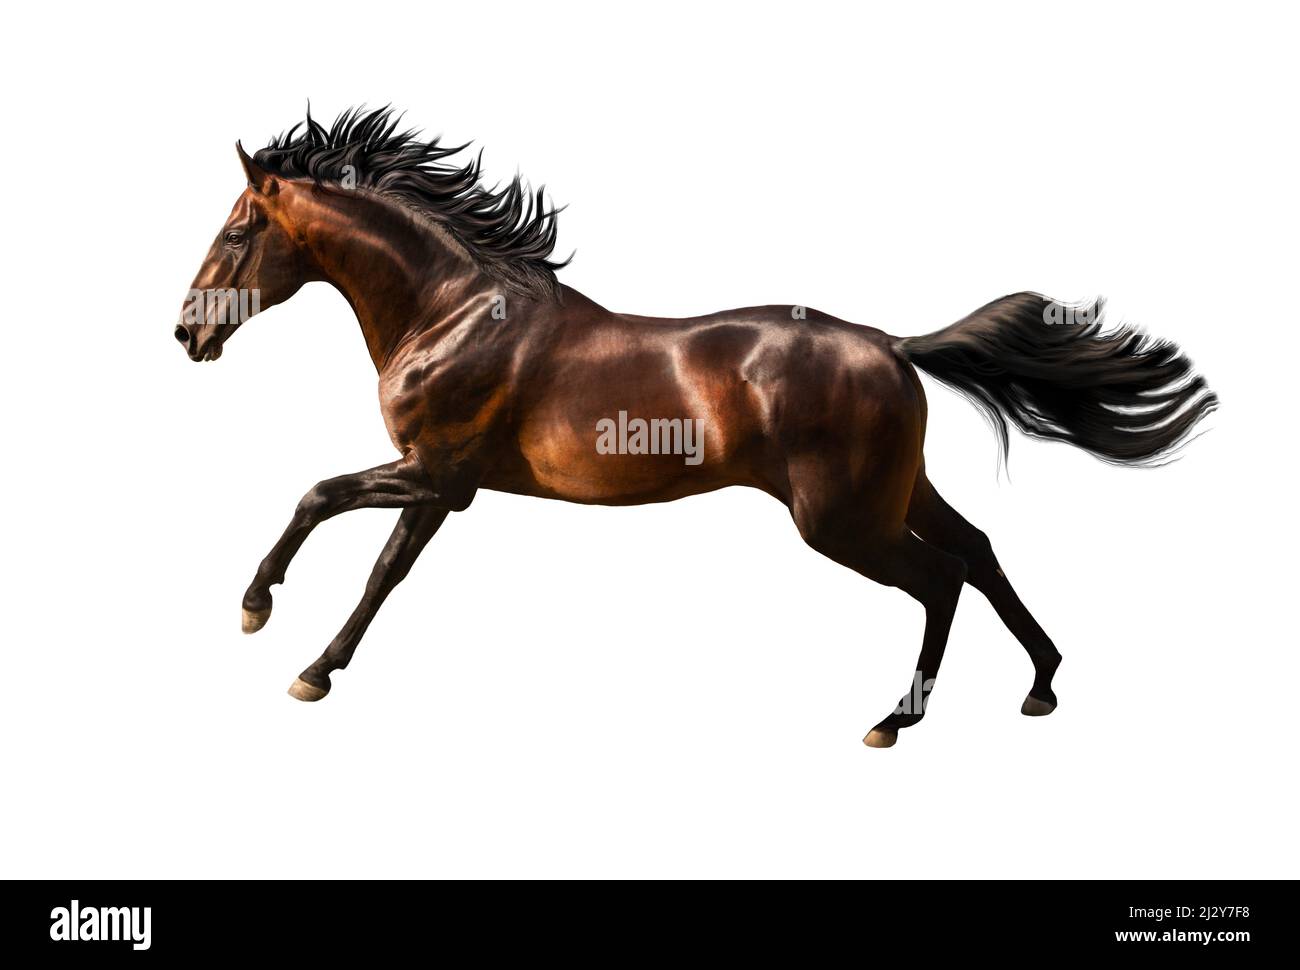 The black horse run isolated on white background Stock Photo